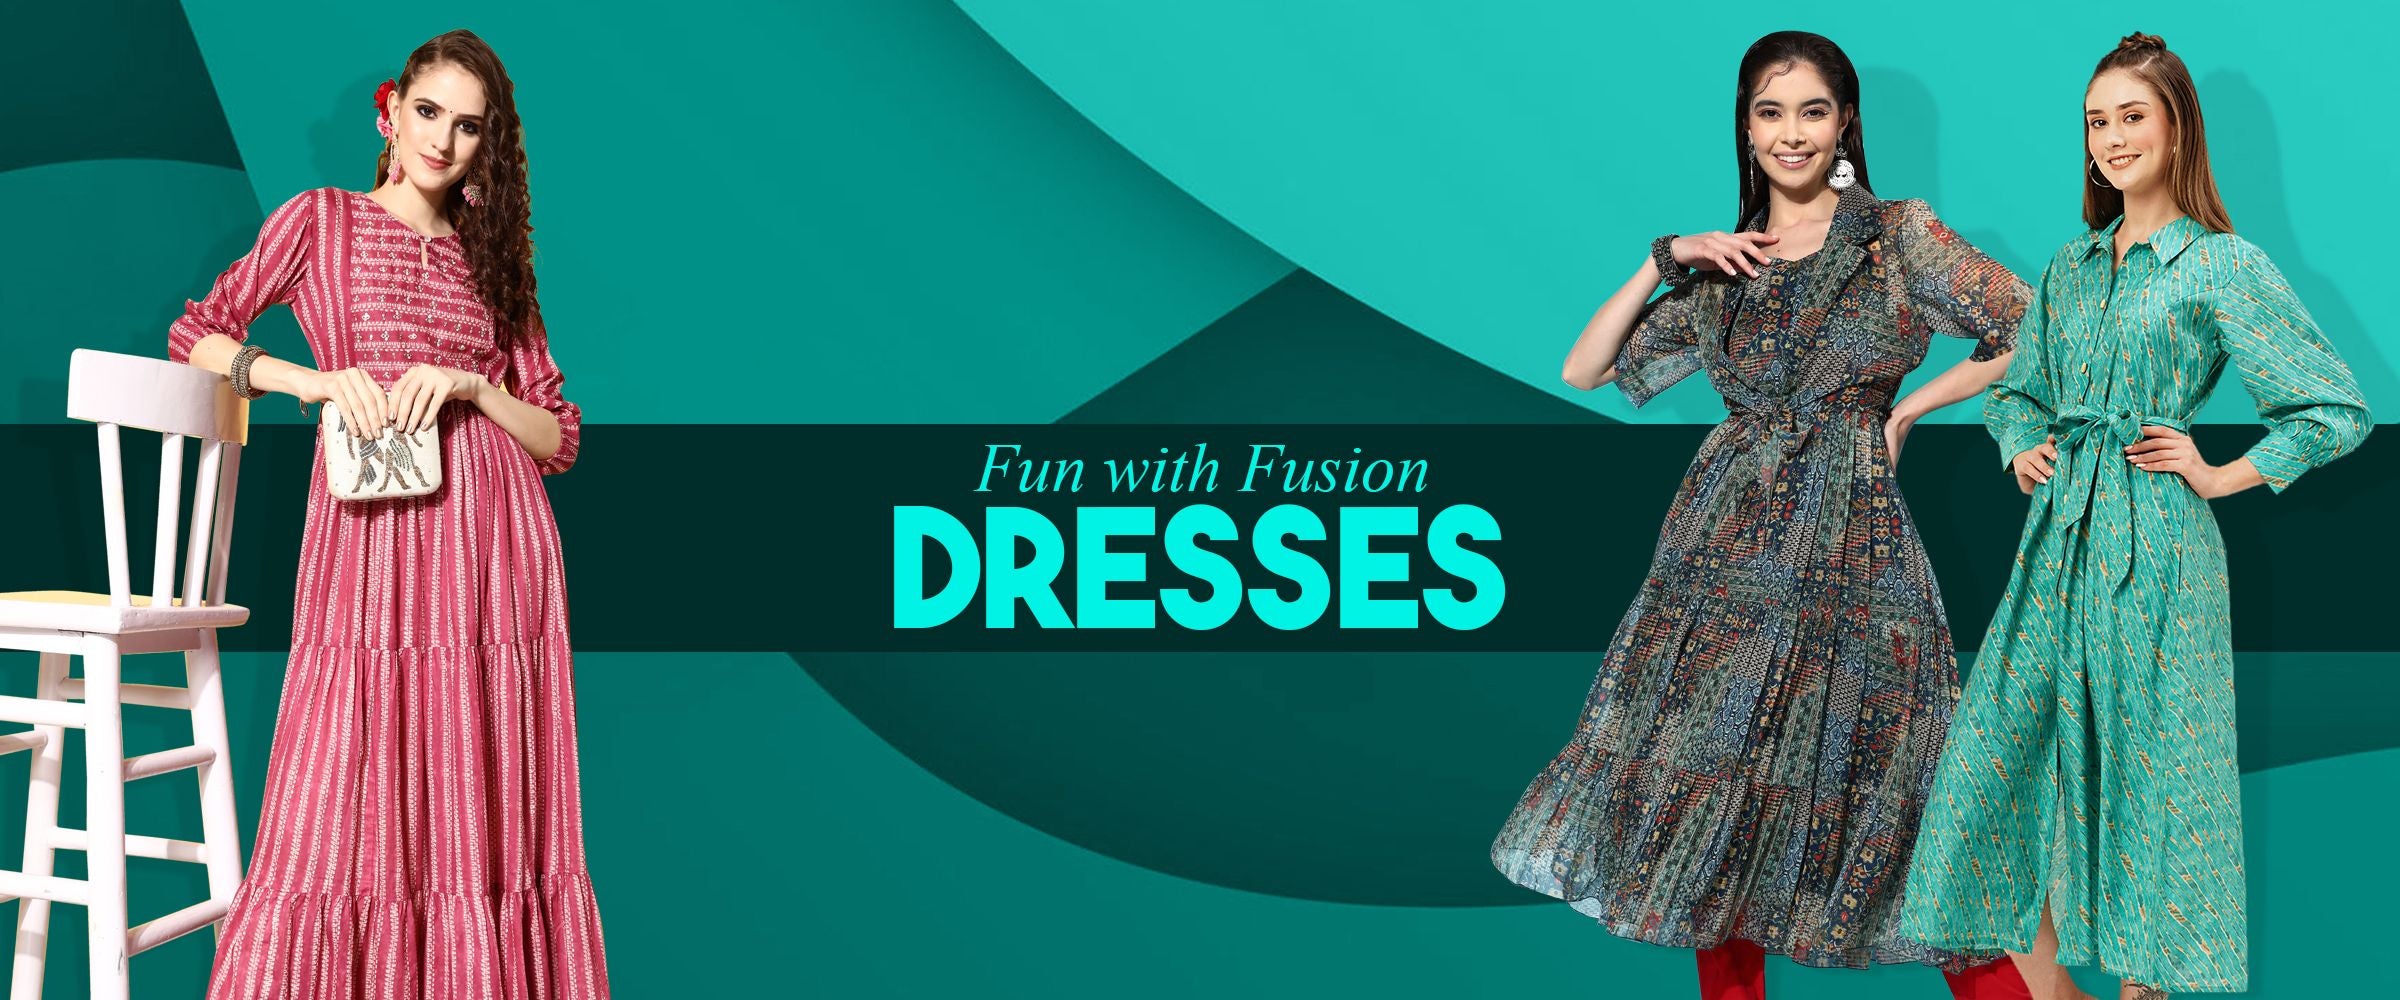 Dresses & Fusion Wear